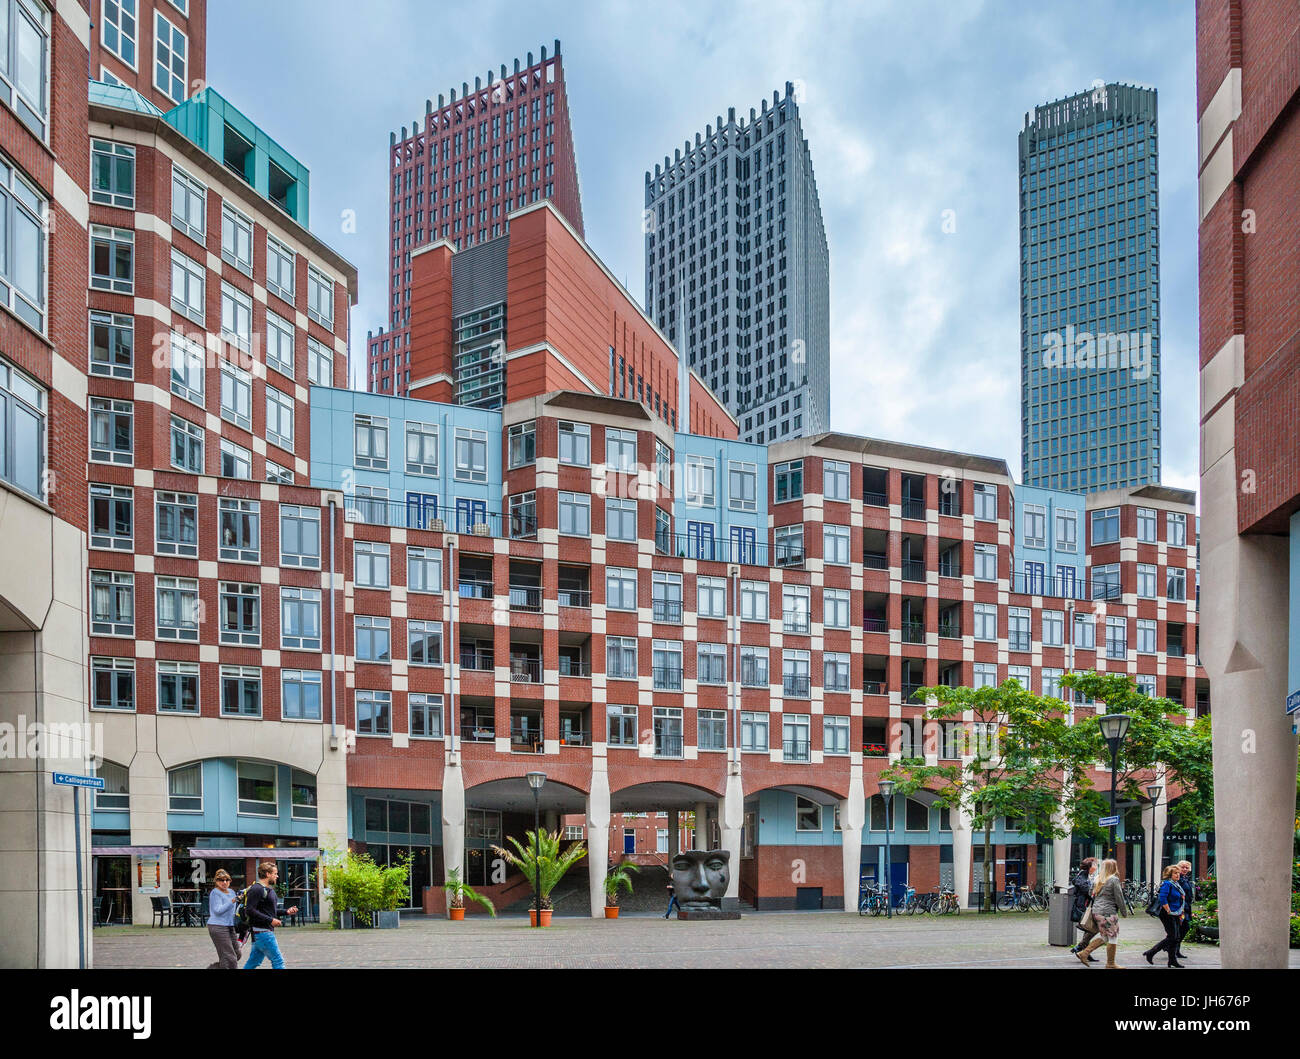 Netherlands, South Holland, The Hague (Den Haag), apartment buildings at Muzenplein modern urban development Stock Photo